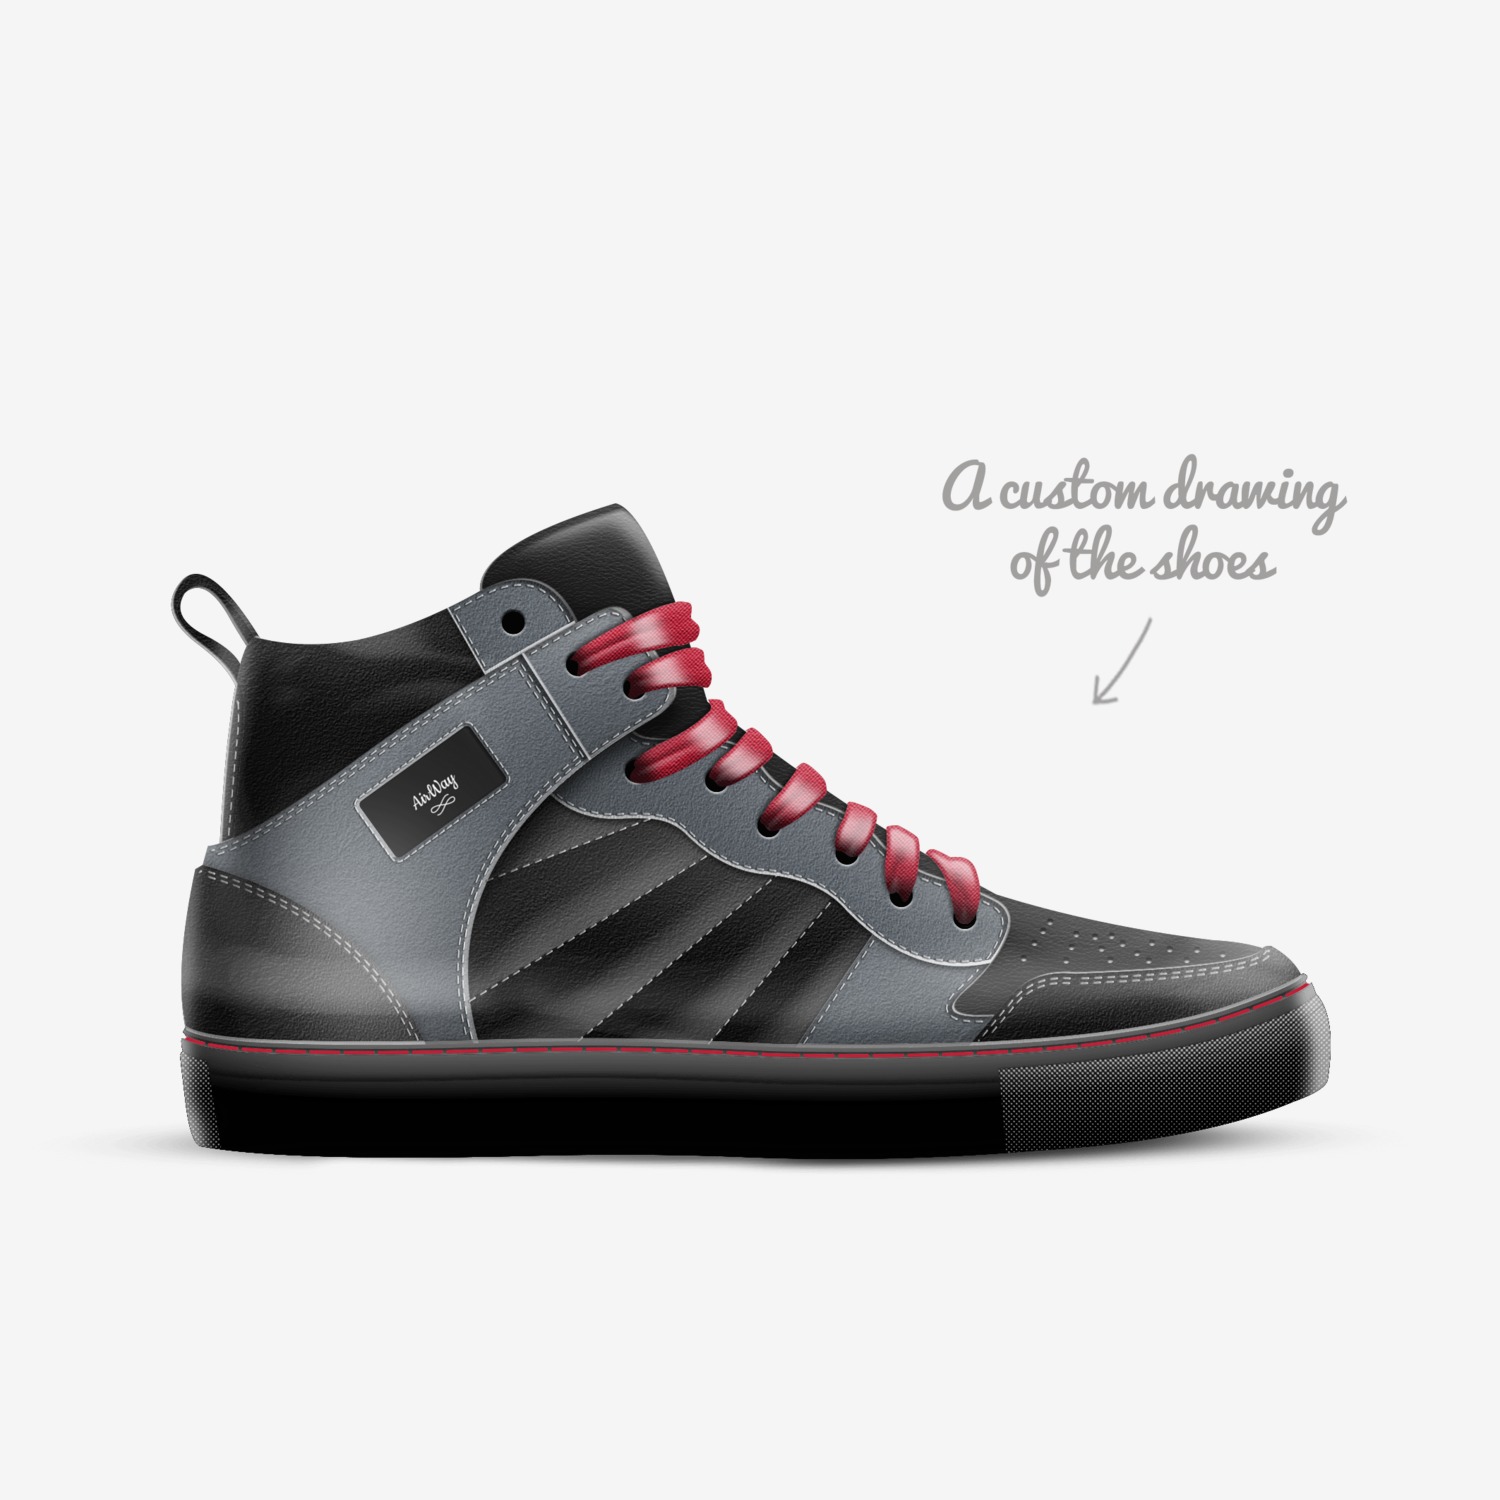 AirWay | A Custom Shoe concept by Joey Chavira